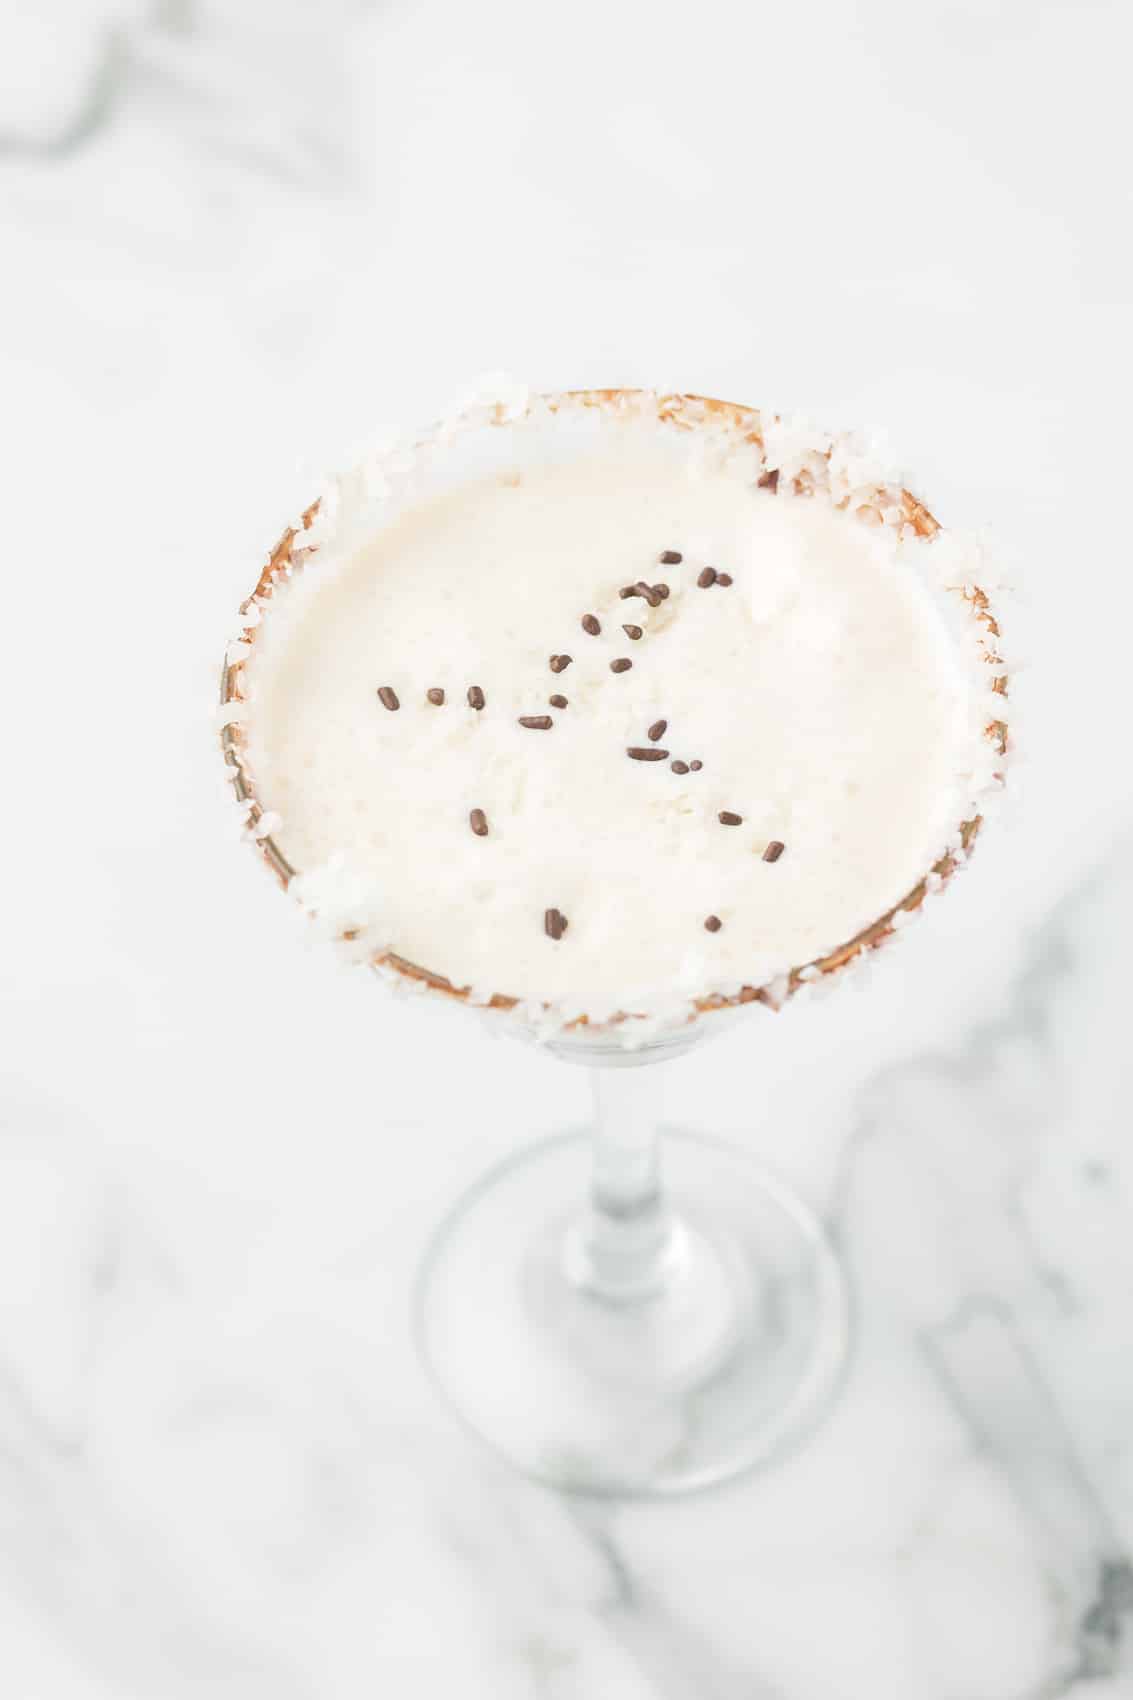 Almond Joy Martini with a coconut rim and chocolate sprinkles.